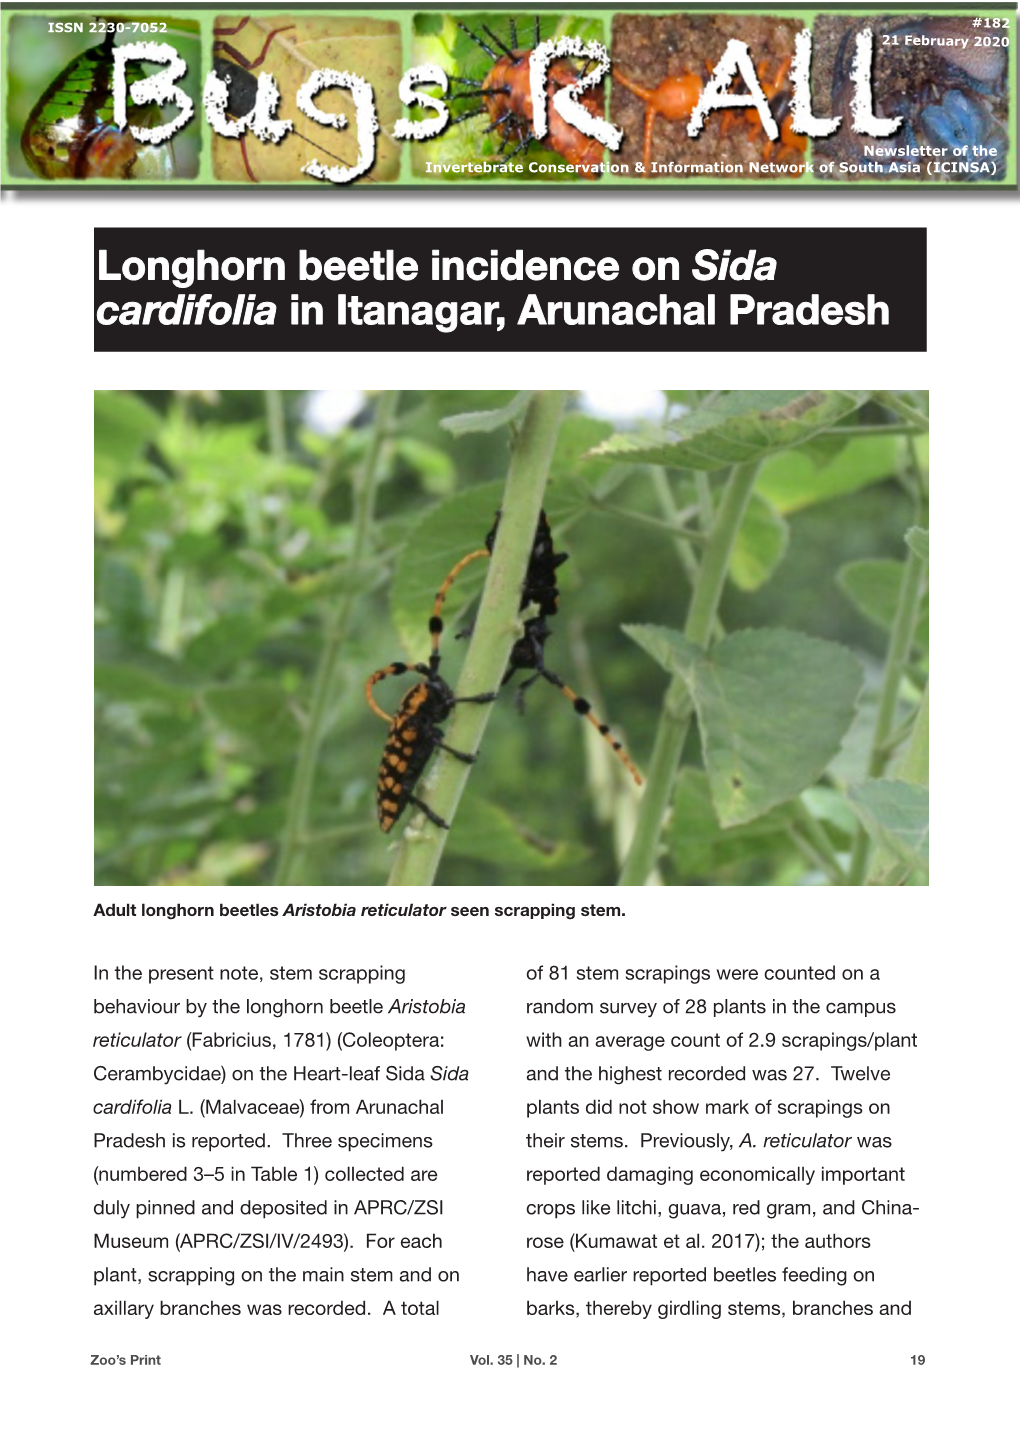 Longhorn Beetle Incidence on Sida Cardifolia in Itanagar, Arunachal Pradesh